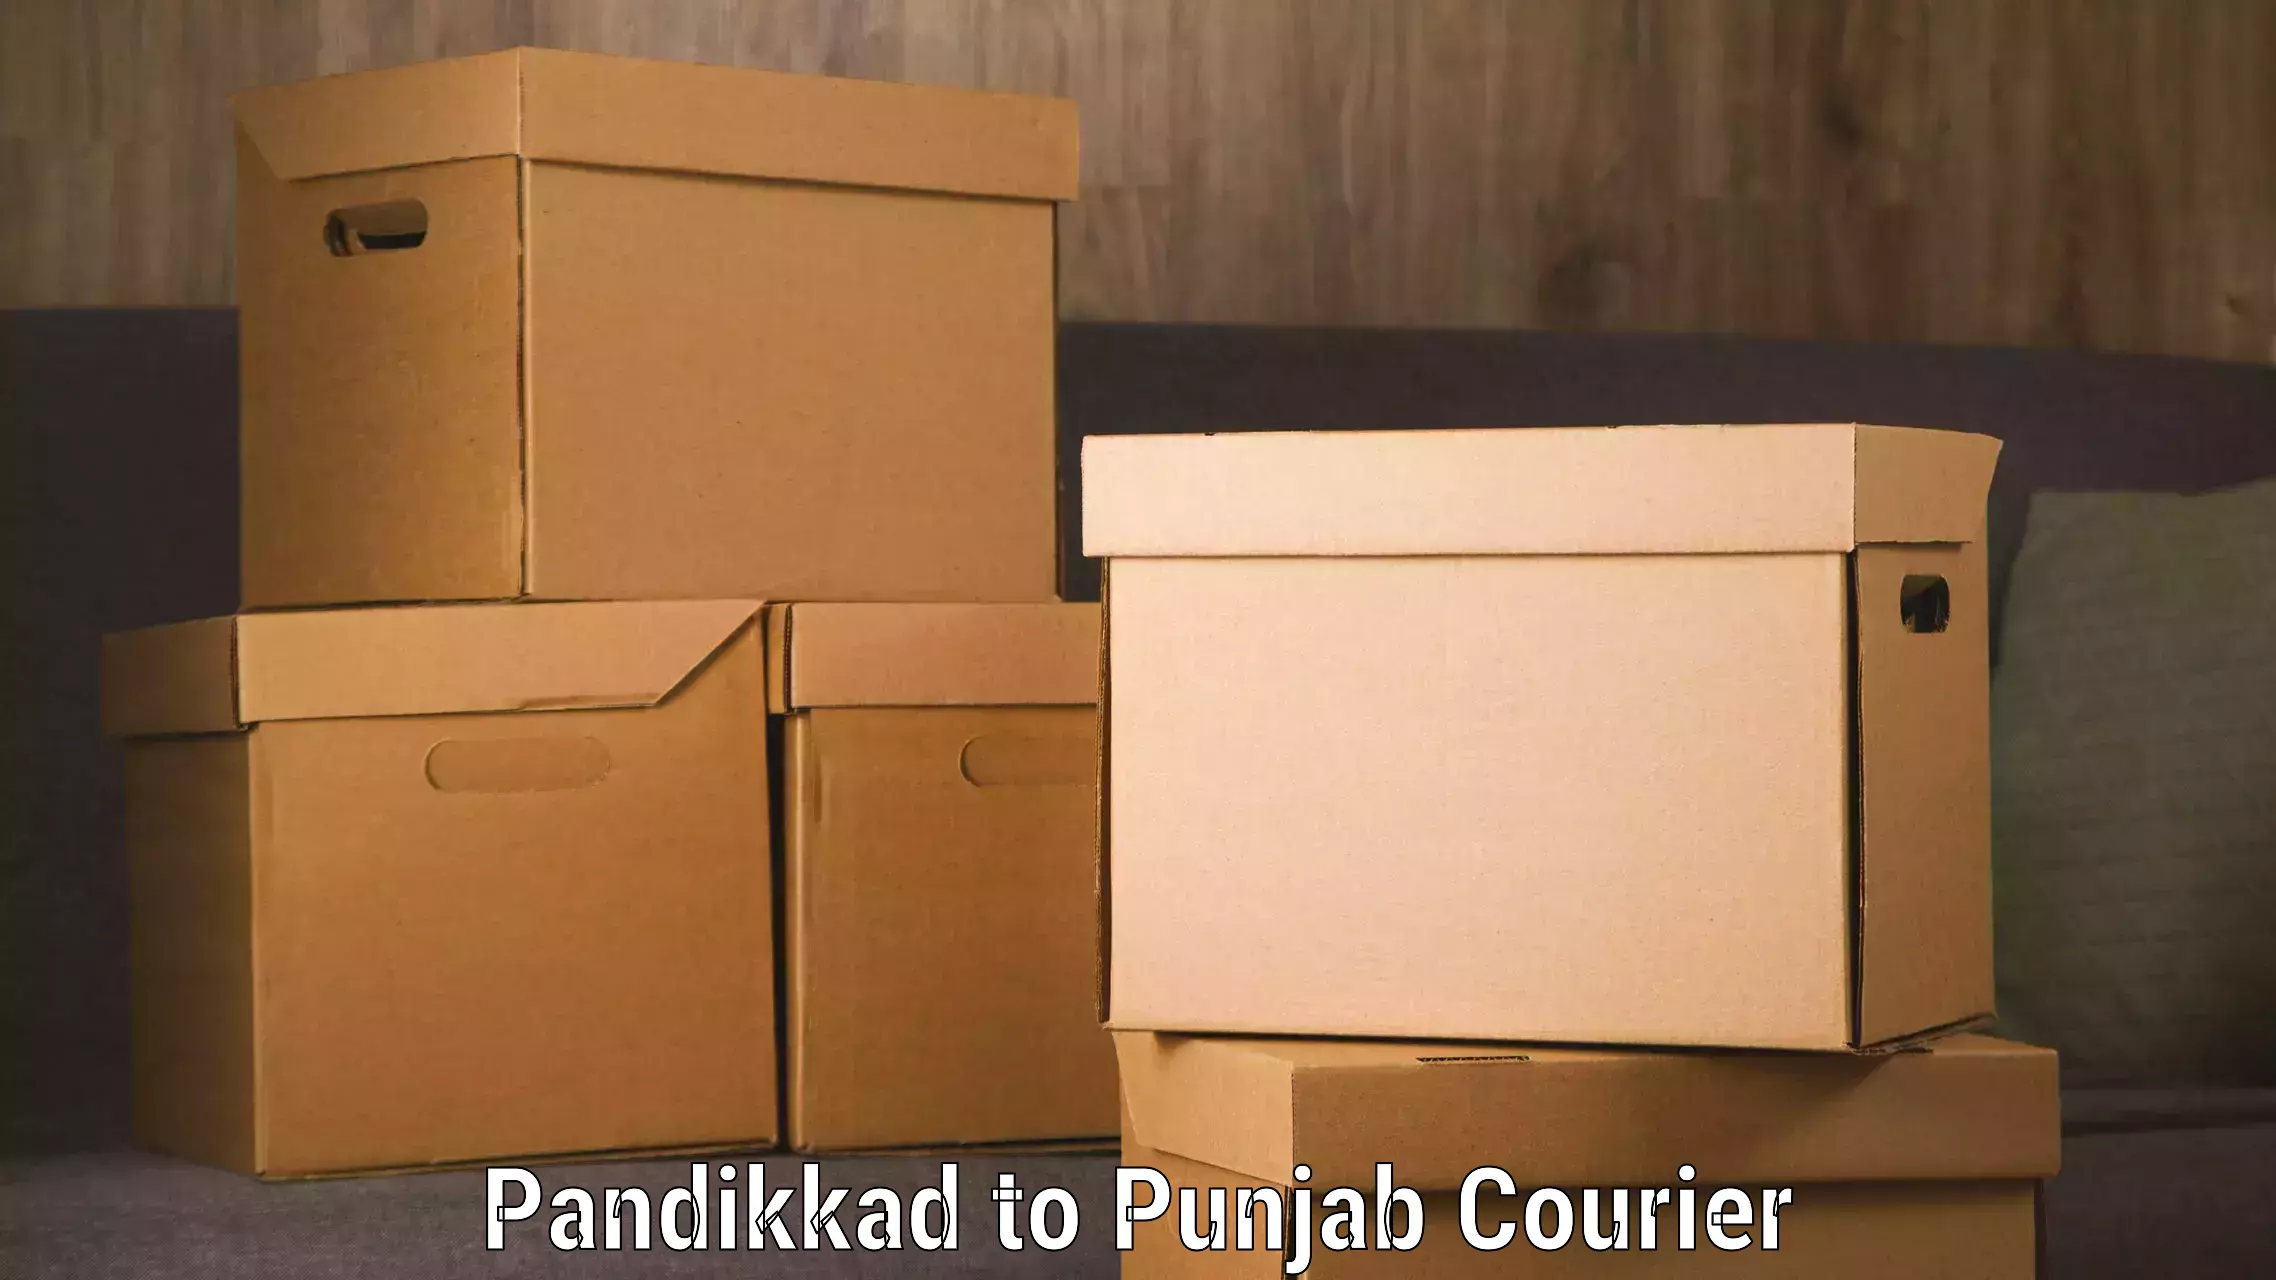 24/7 courier service Pandikkad to Punjab